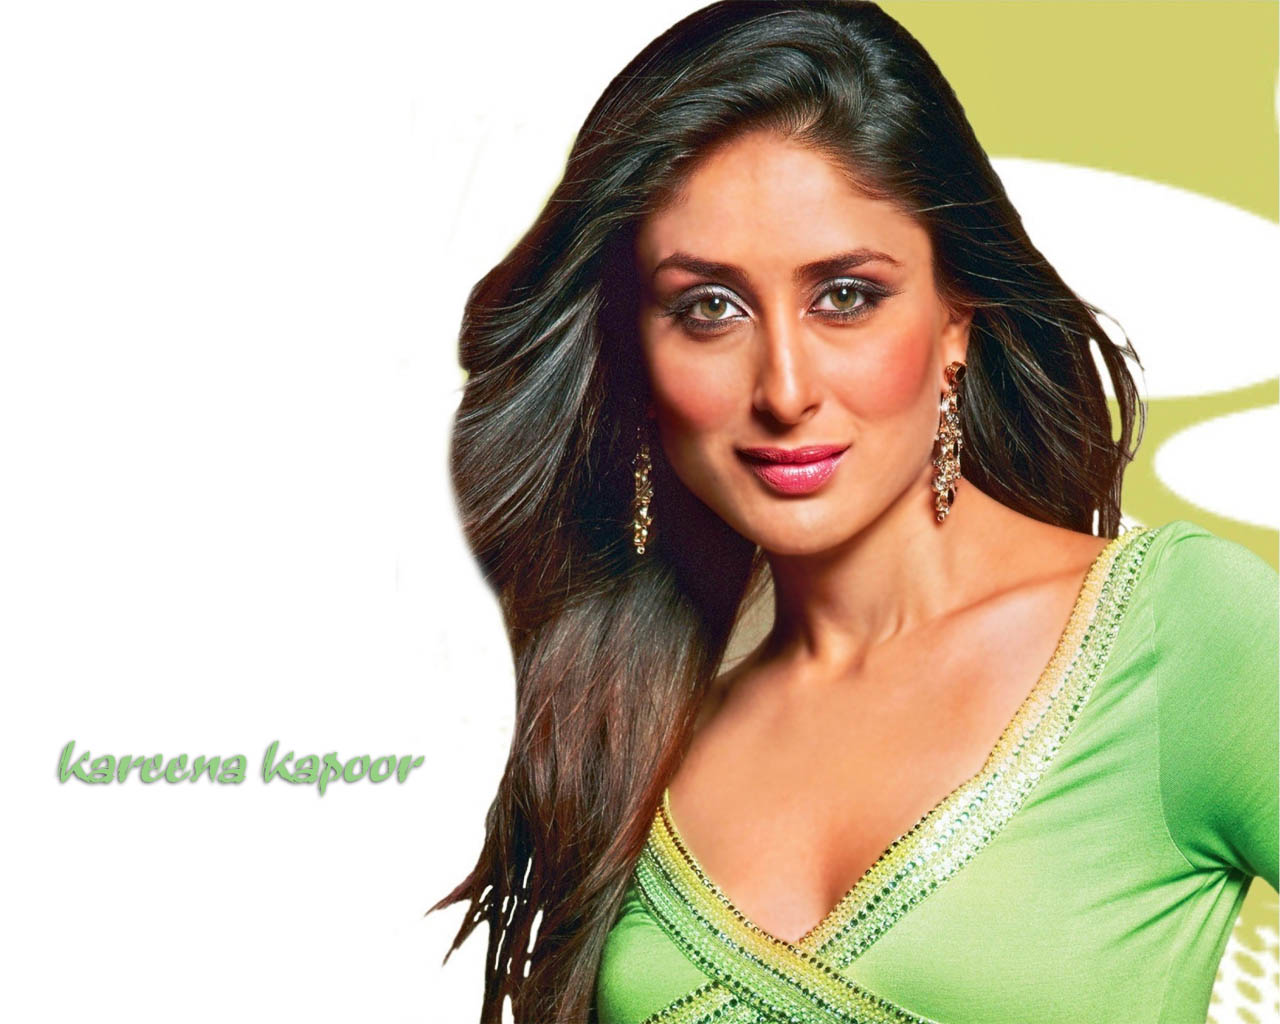 Kareena Kapoor, actress Kareena Kapoor, Kareena Kapoor hot cleavage show, K...